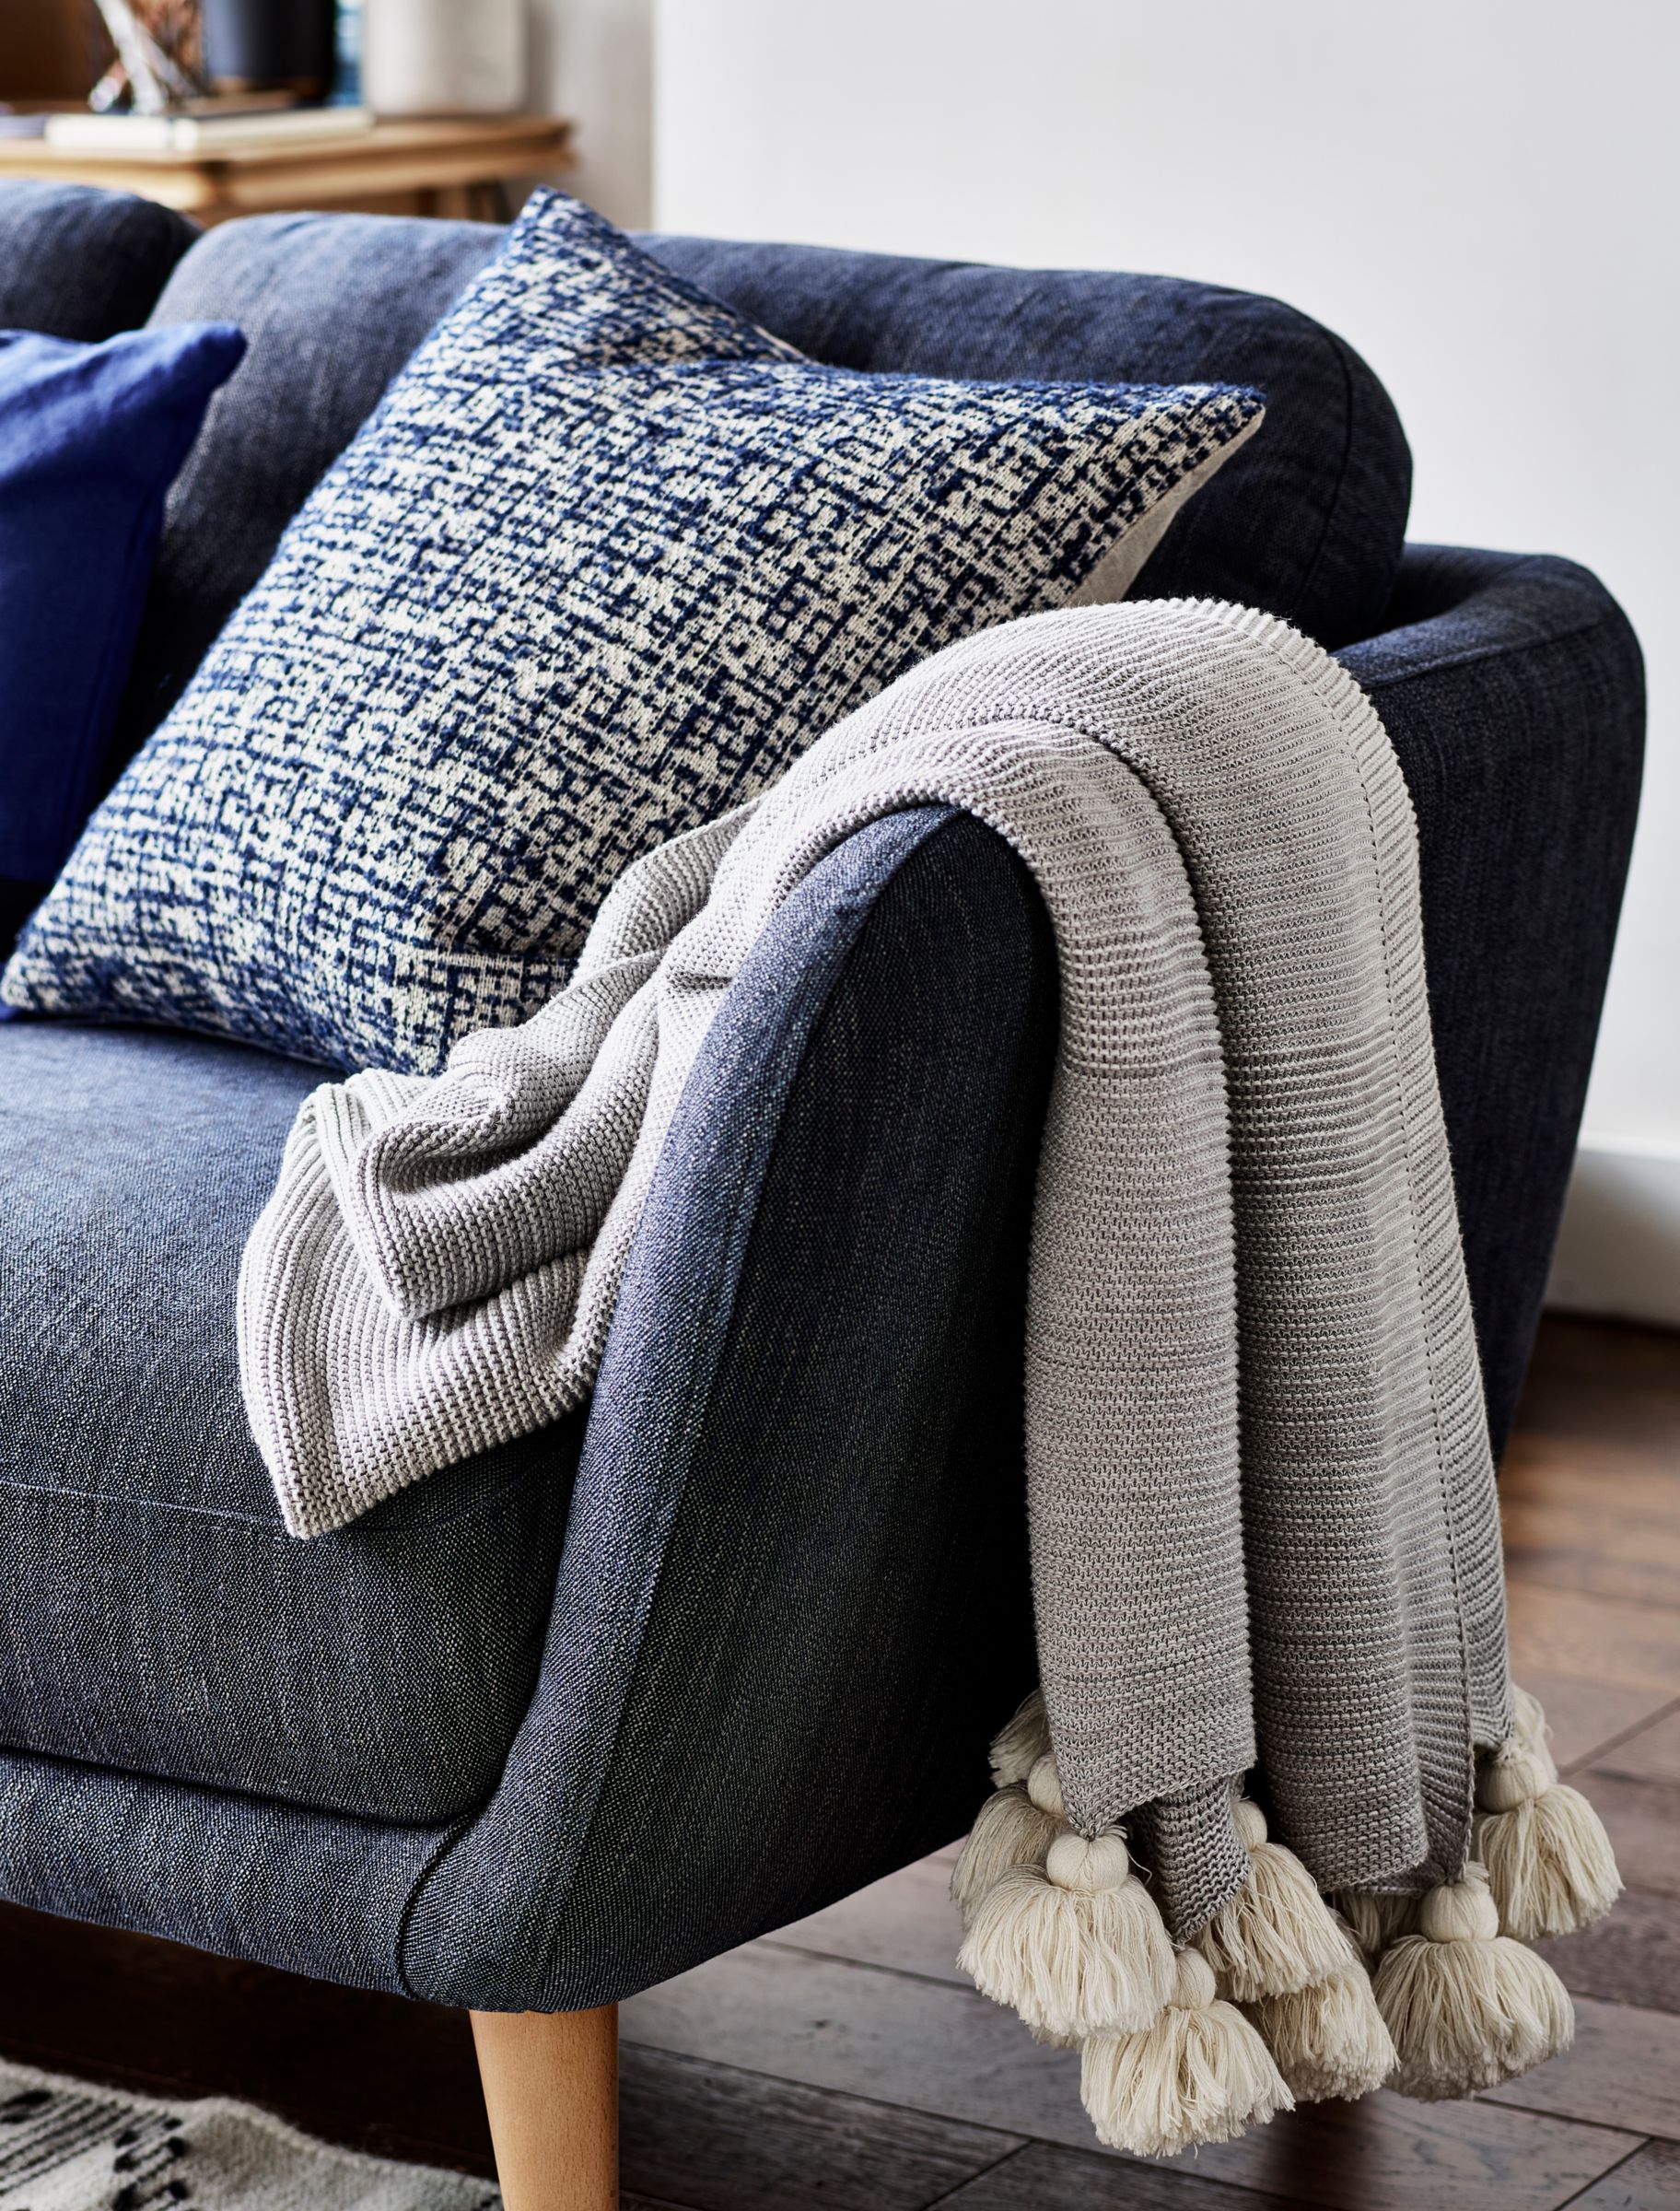 A sofa with grey throw